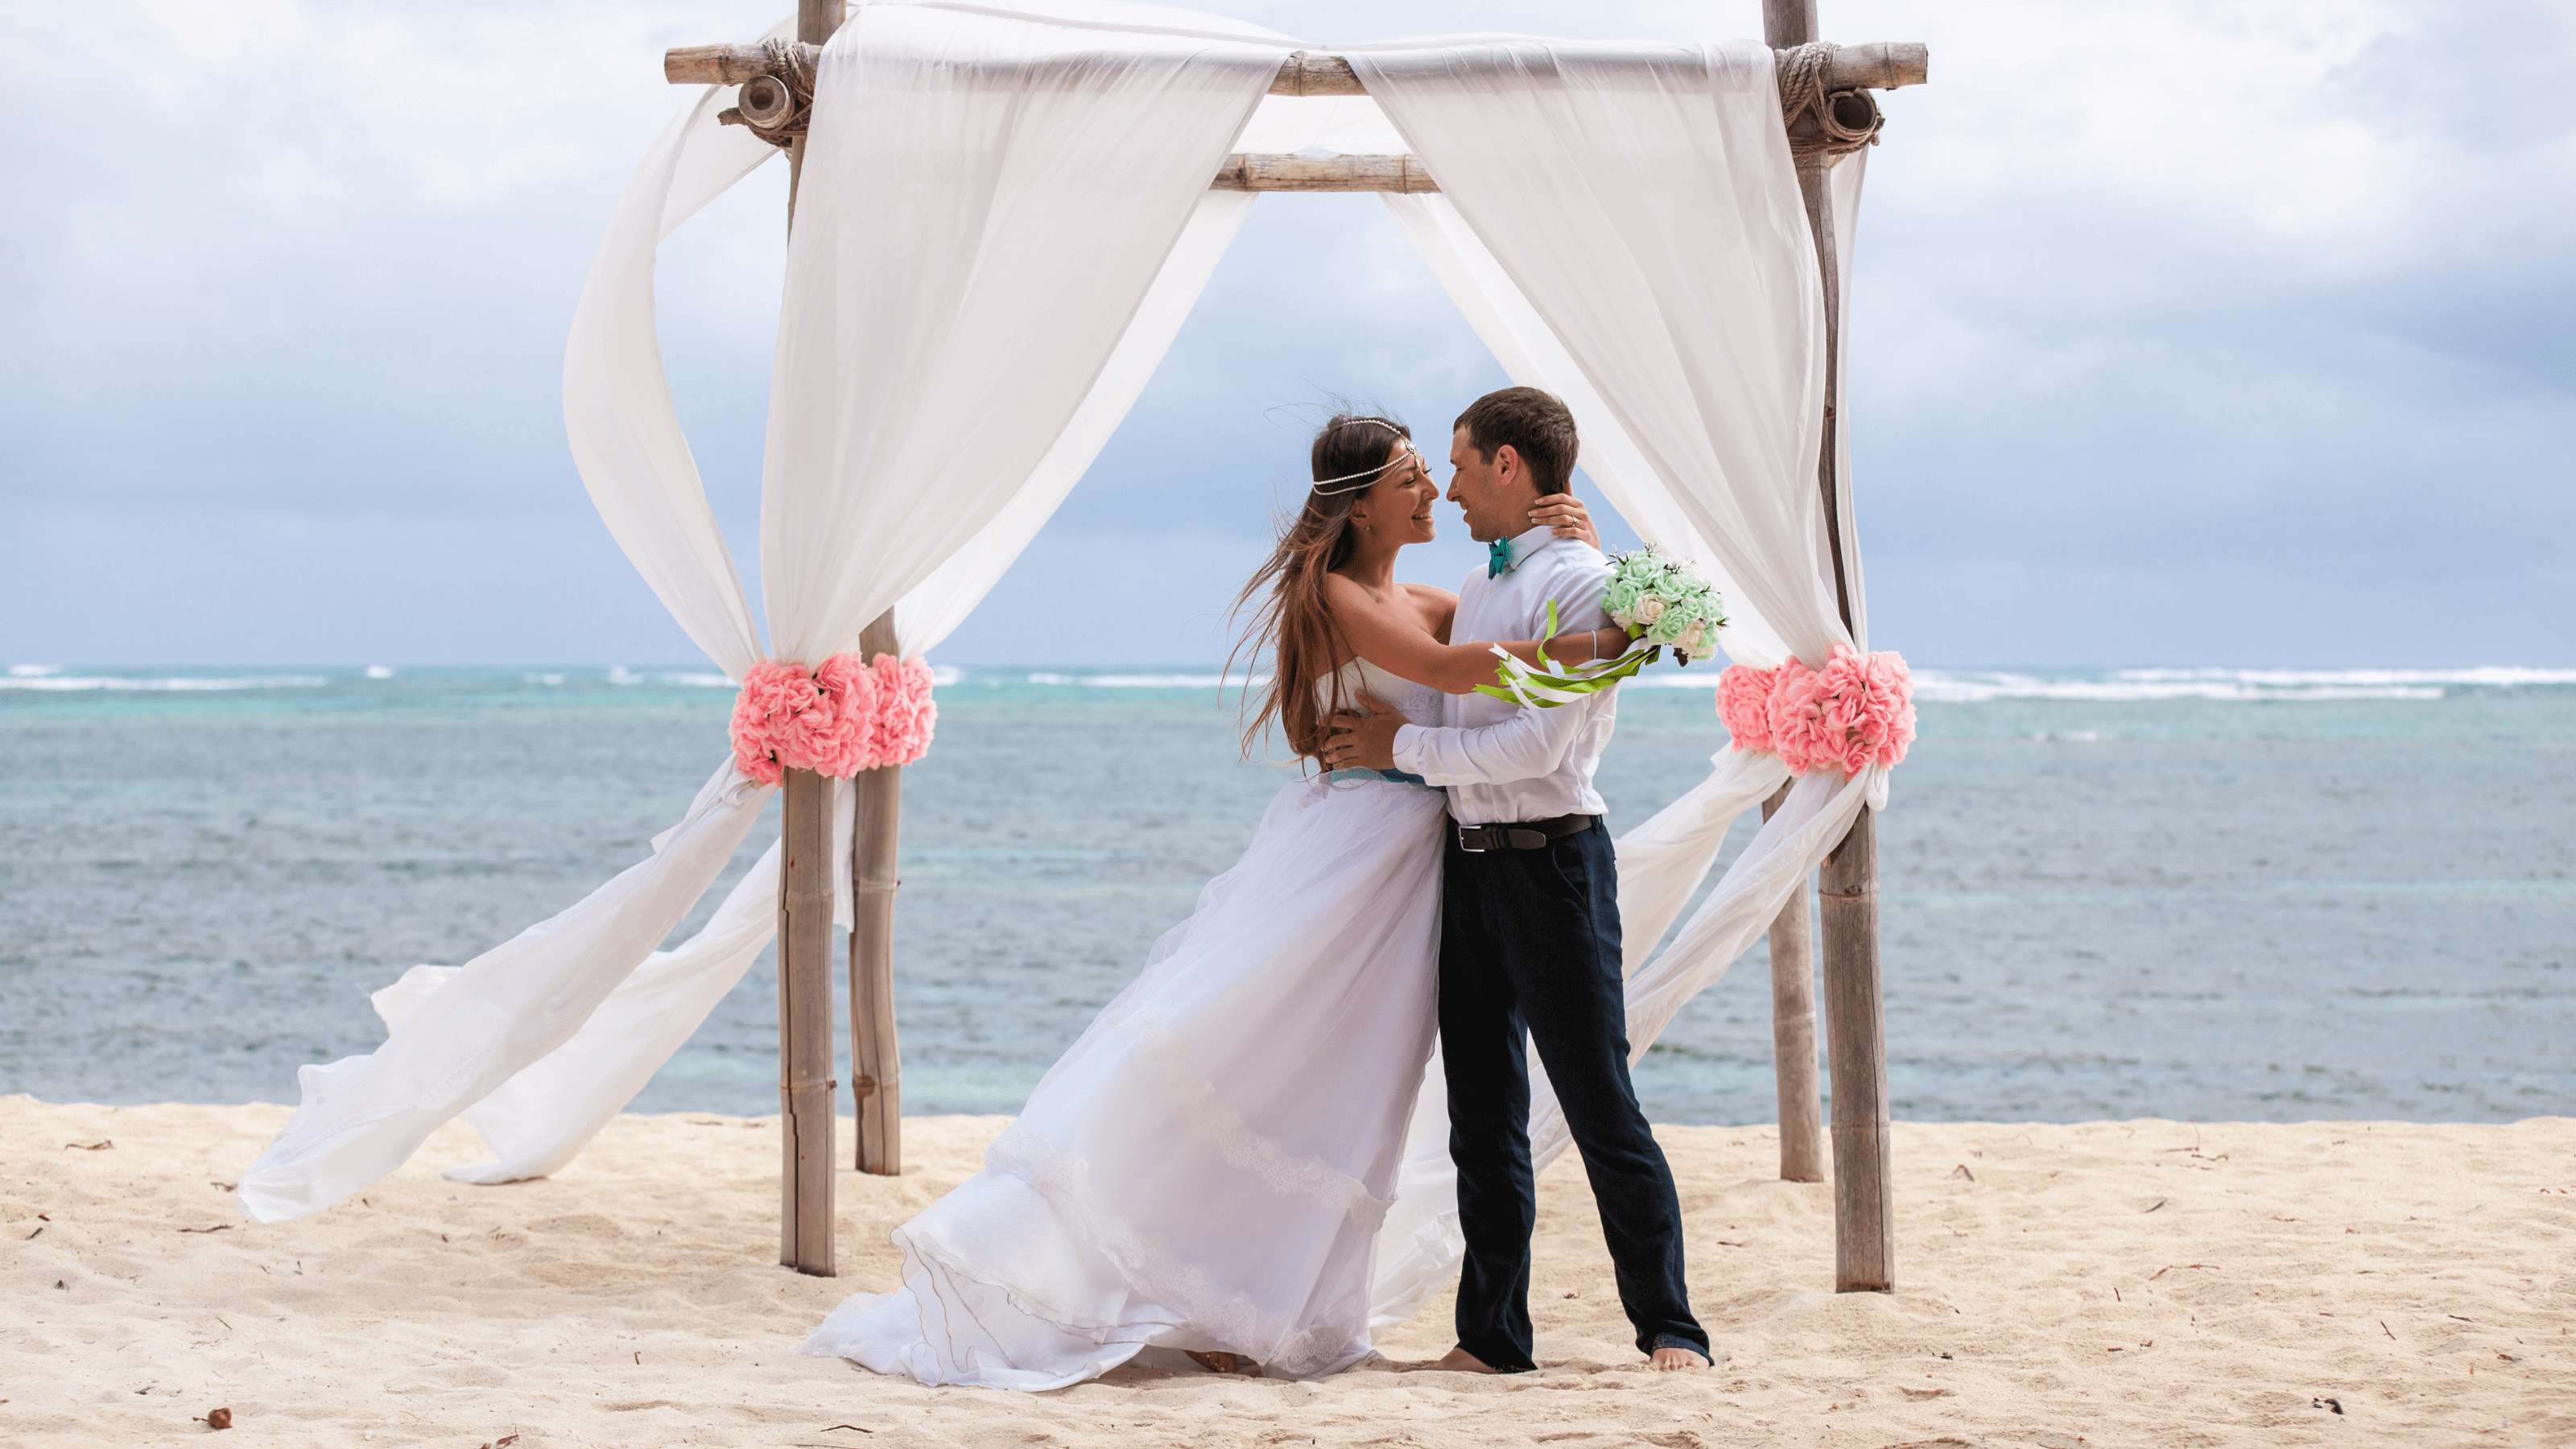 Wedding on a budget by Southern beach weddings